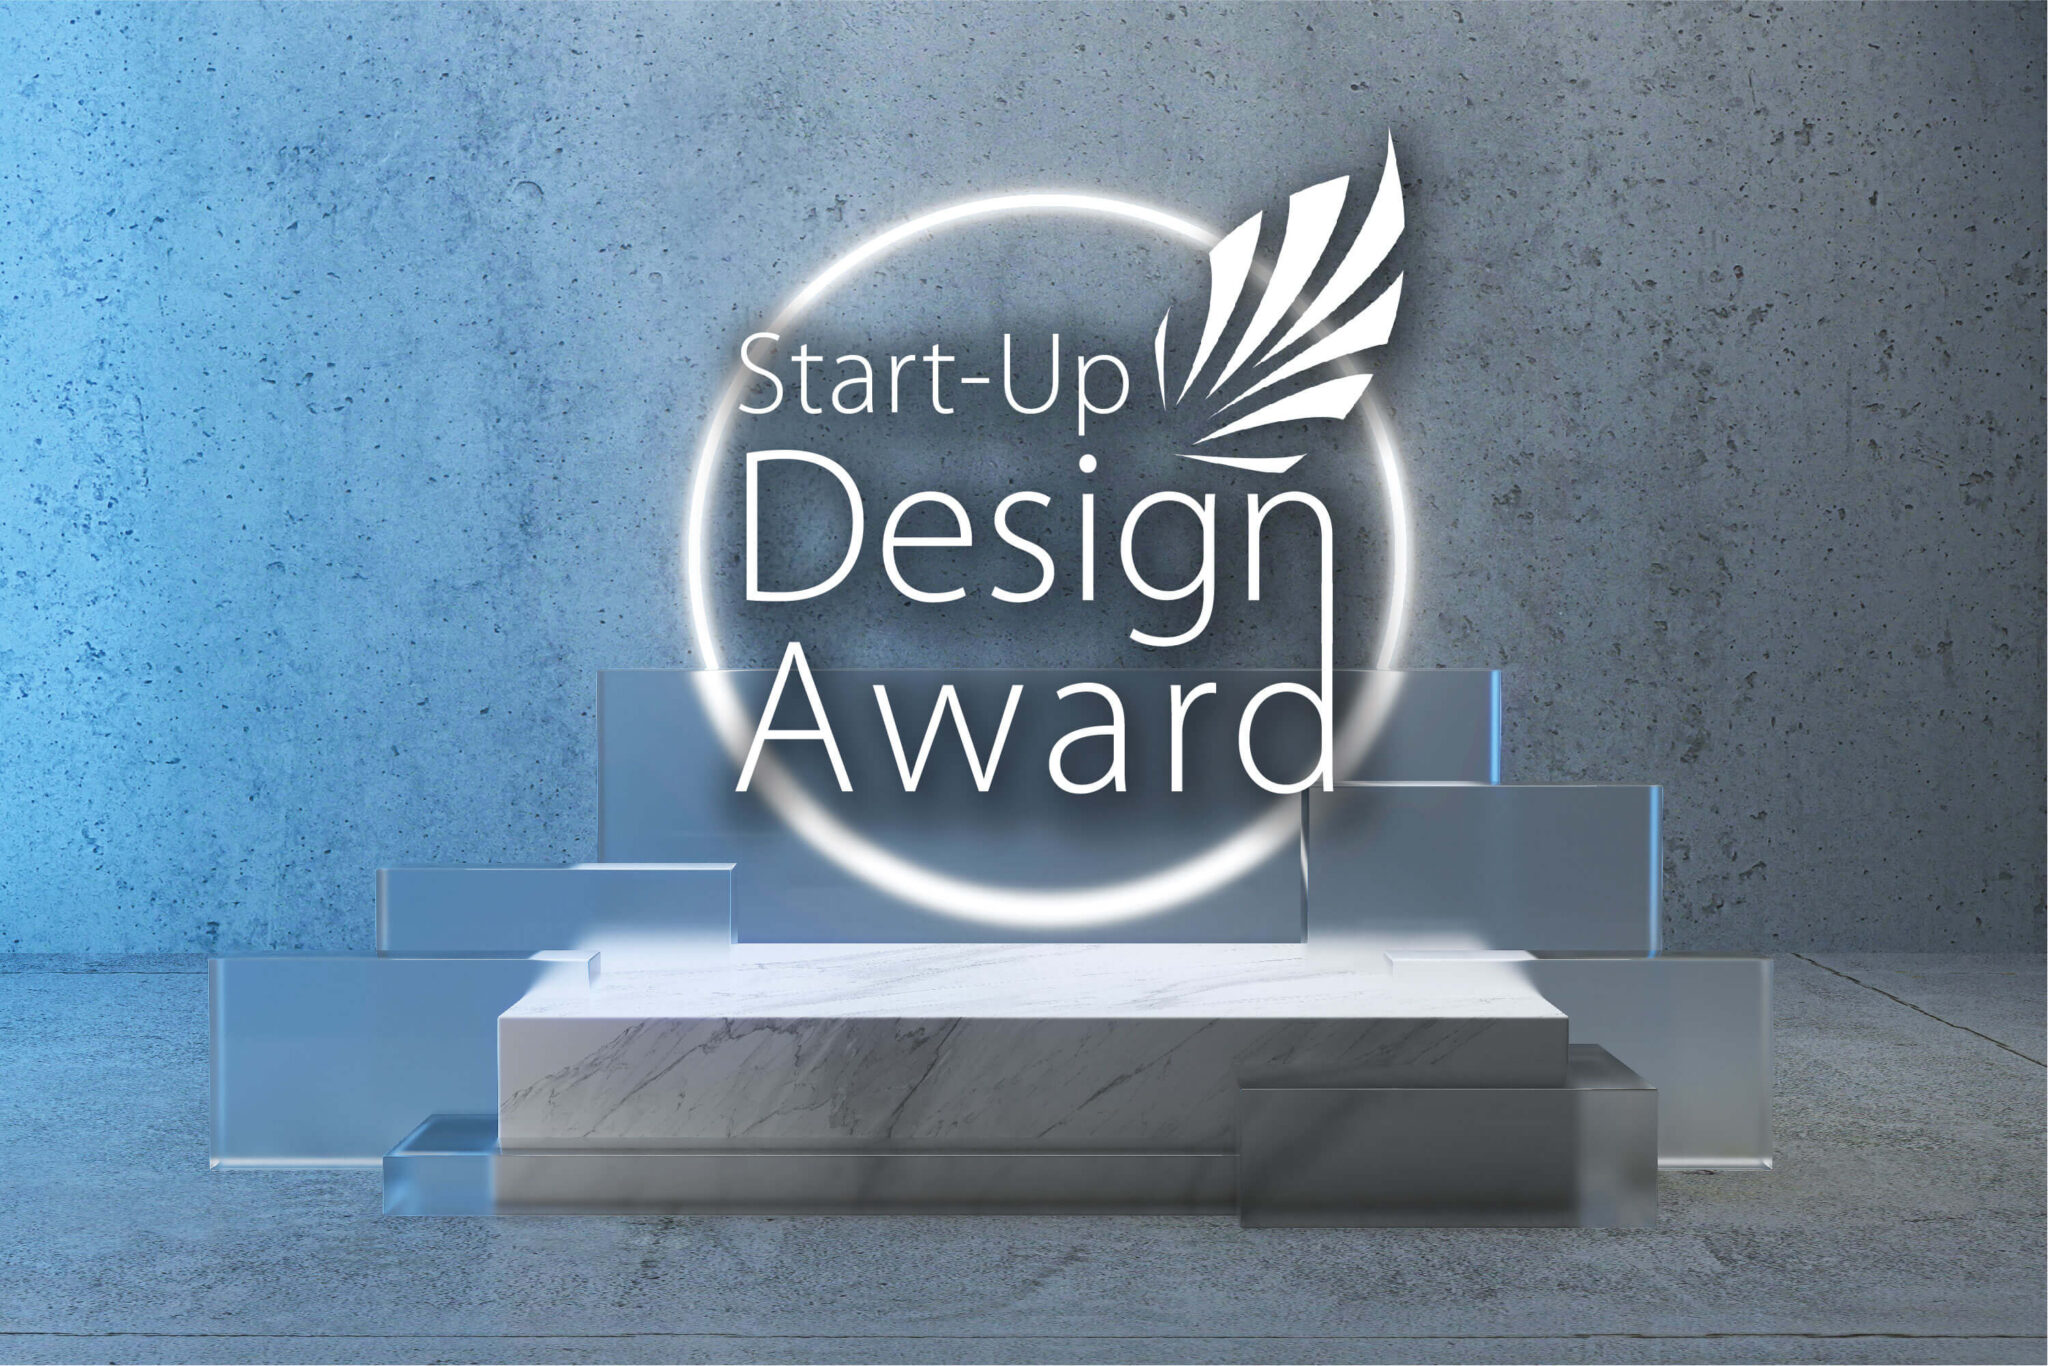 Start-Up Design Award